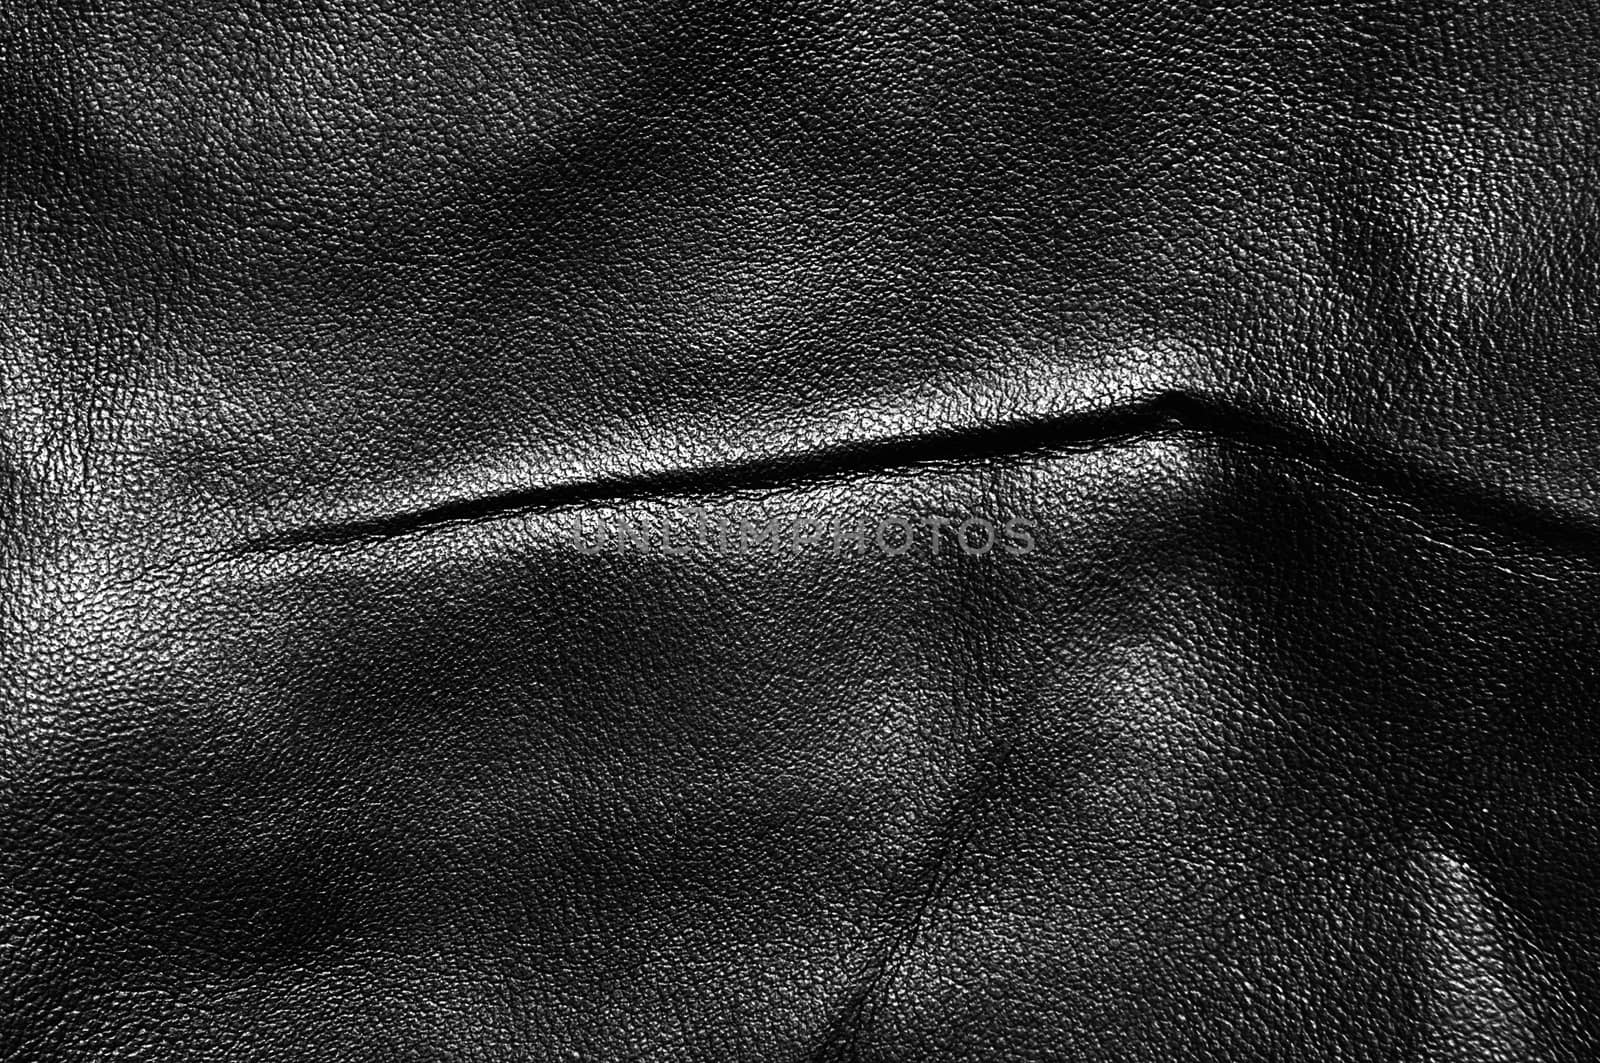 Closeup of seamless black leather texture 